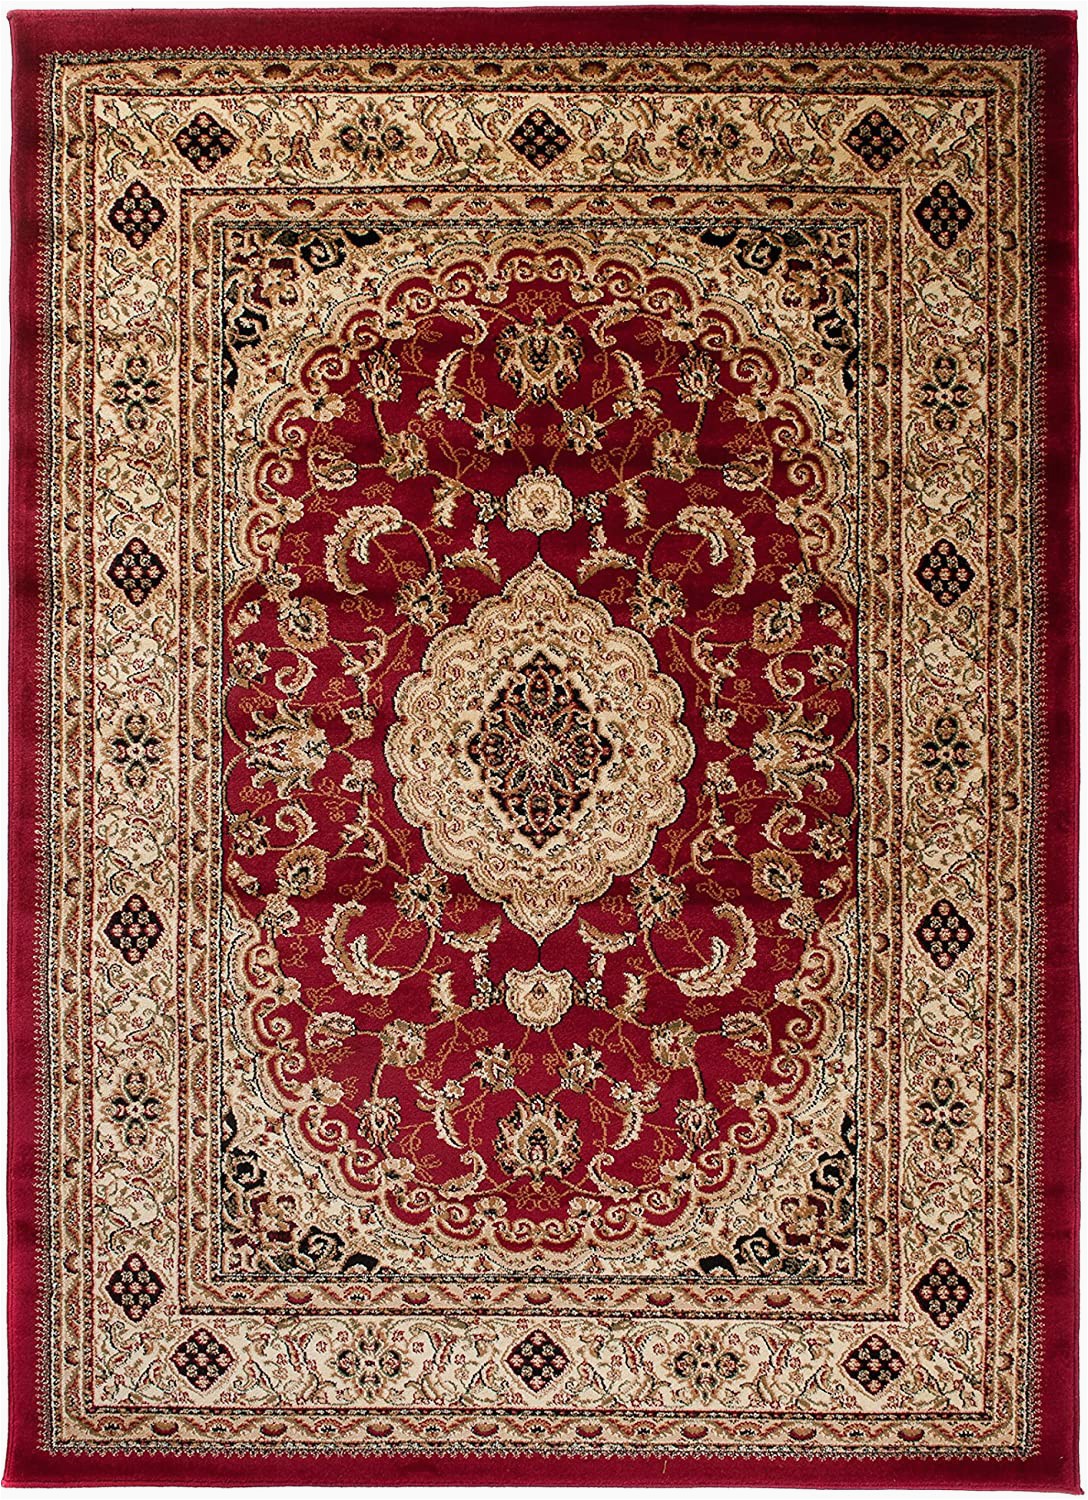 60 X 60 area Rug Carpeto area Rug oriental Traditional Medallion Brown Carpet 2 X 3 3 Ft 60 X 100 Cm iskander Collection